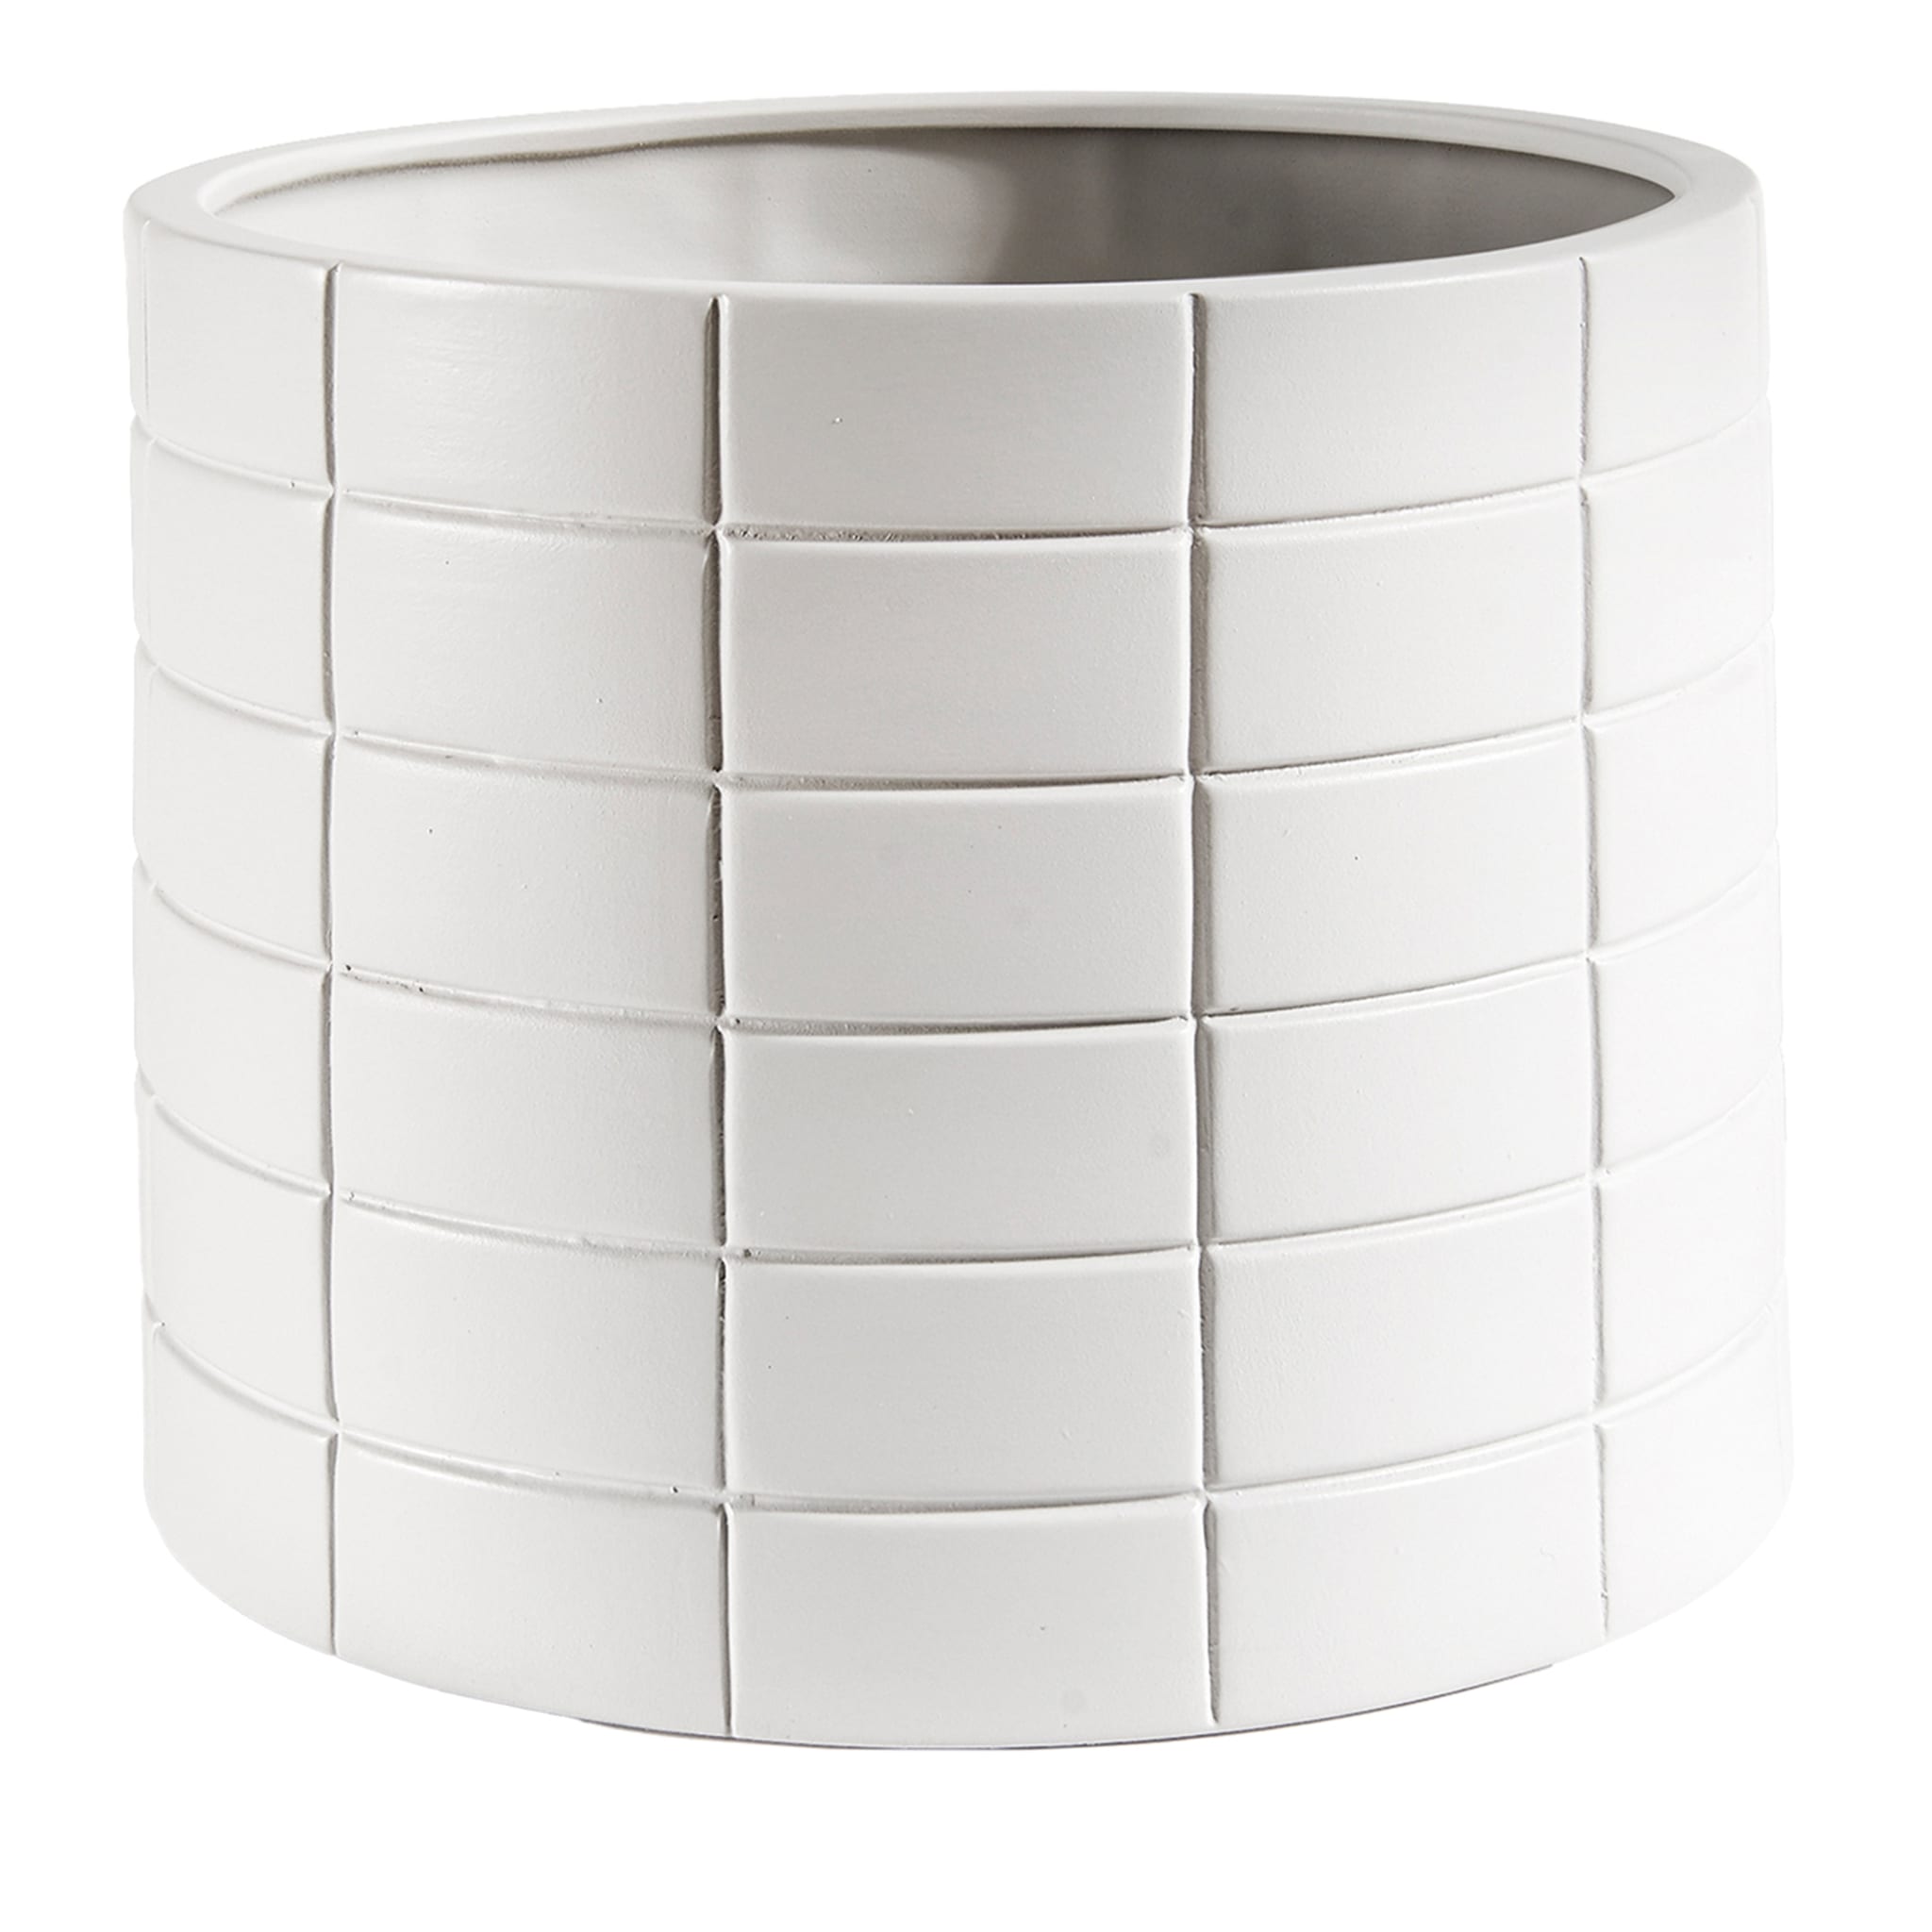 Rikuadra Vaso in ceramica bianca #2 - Vista principale